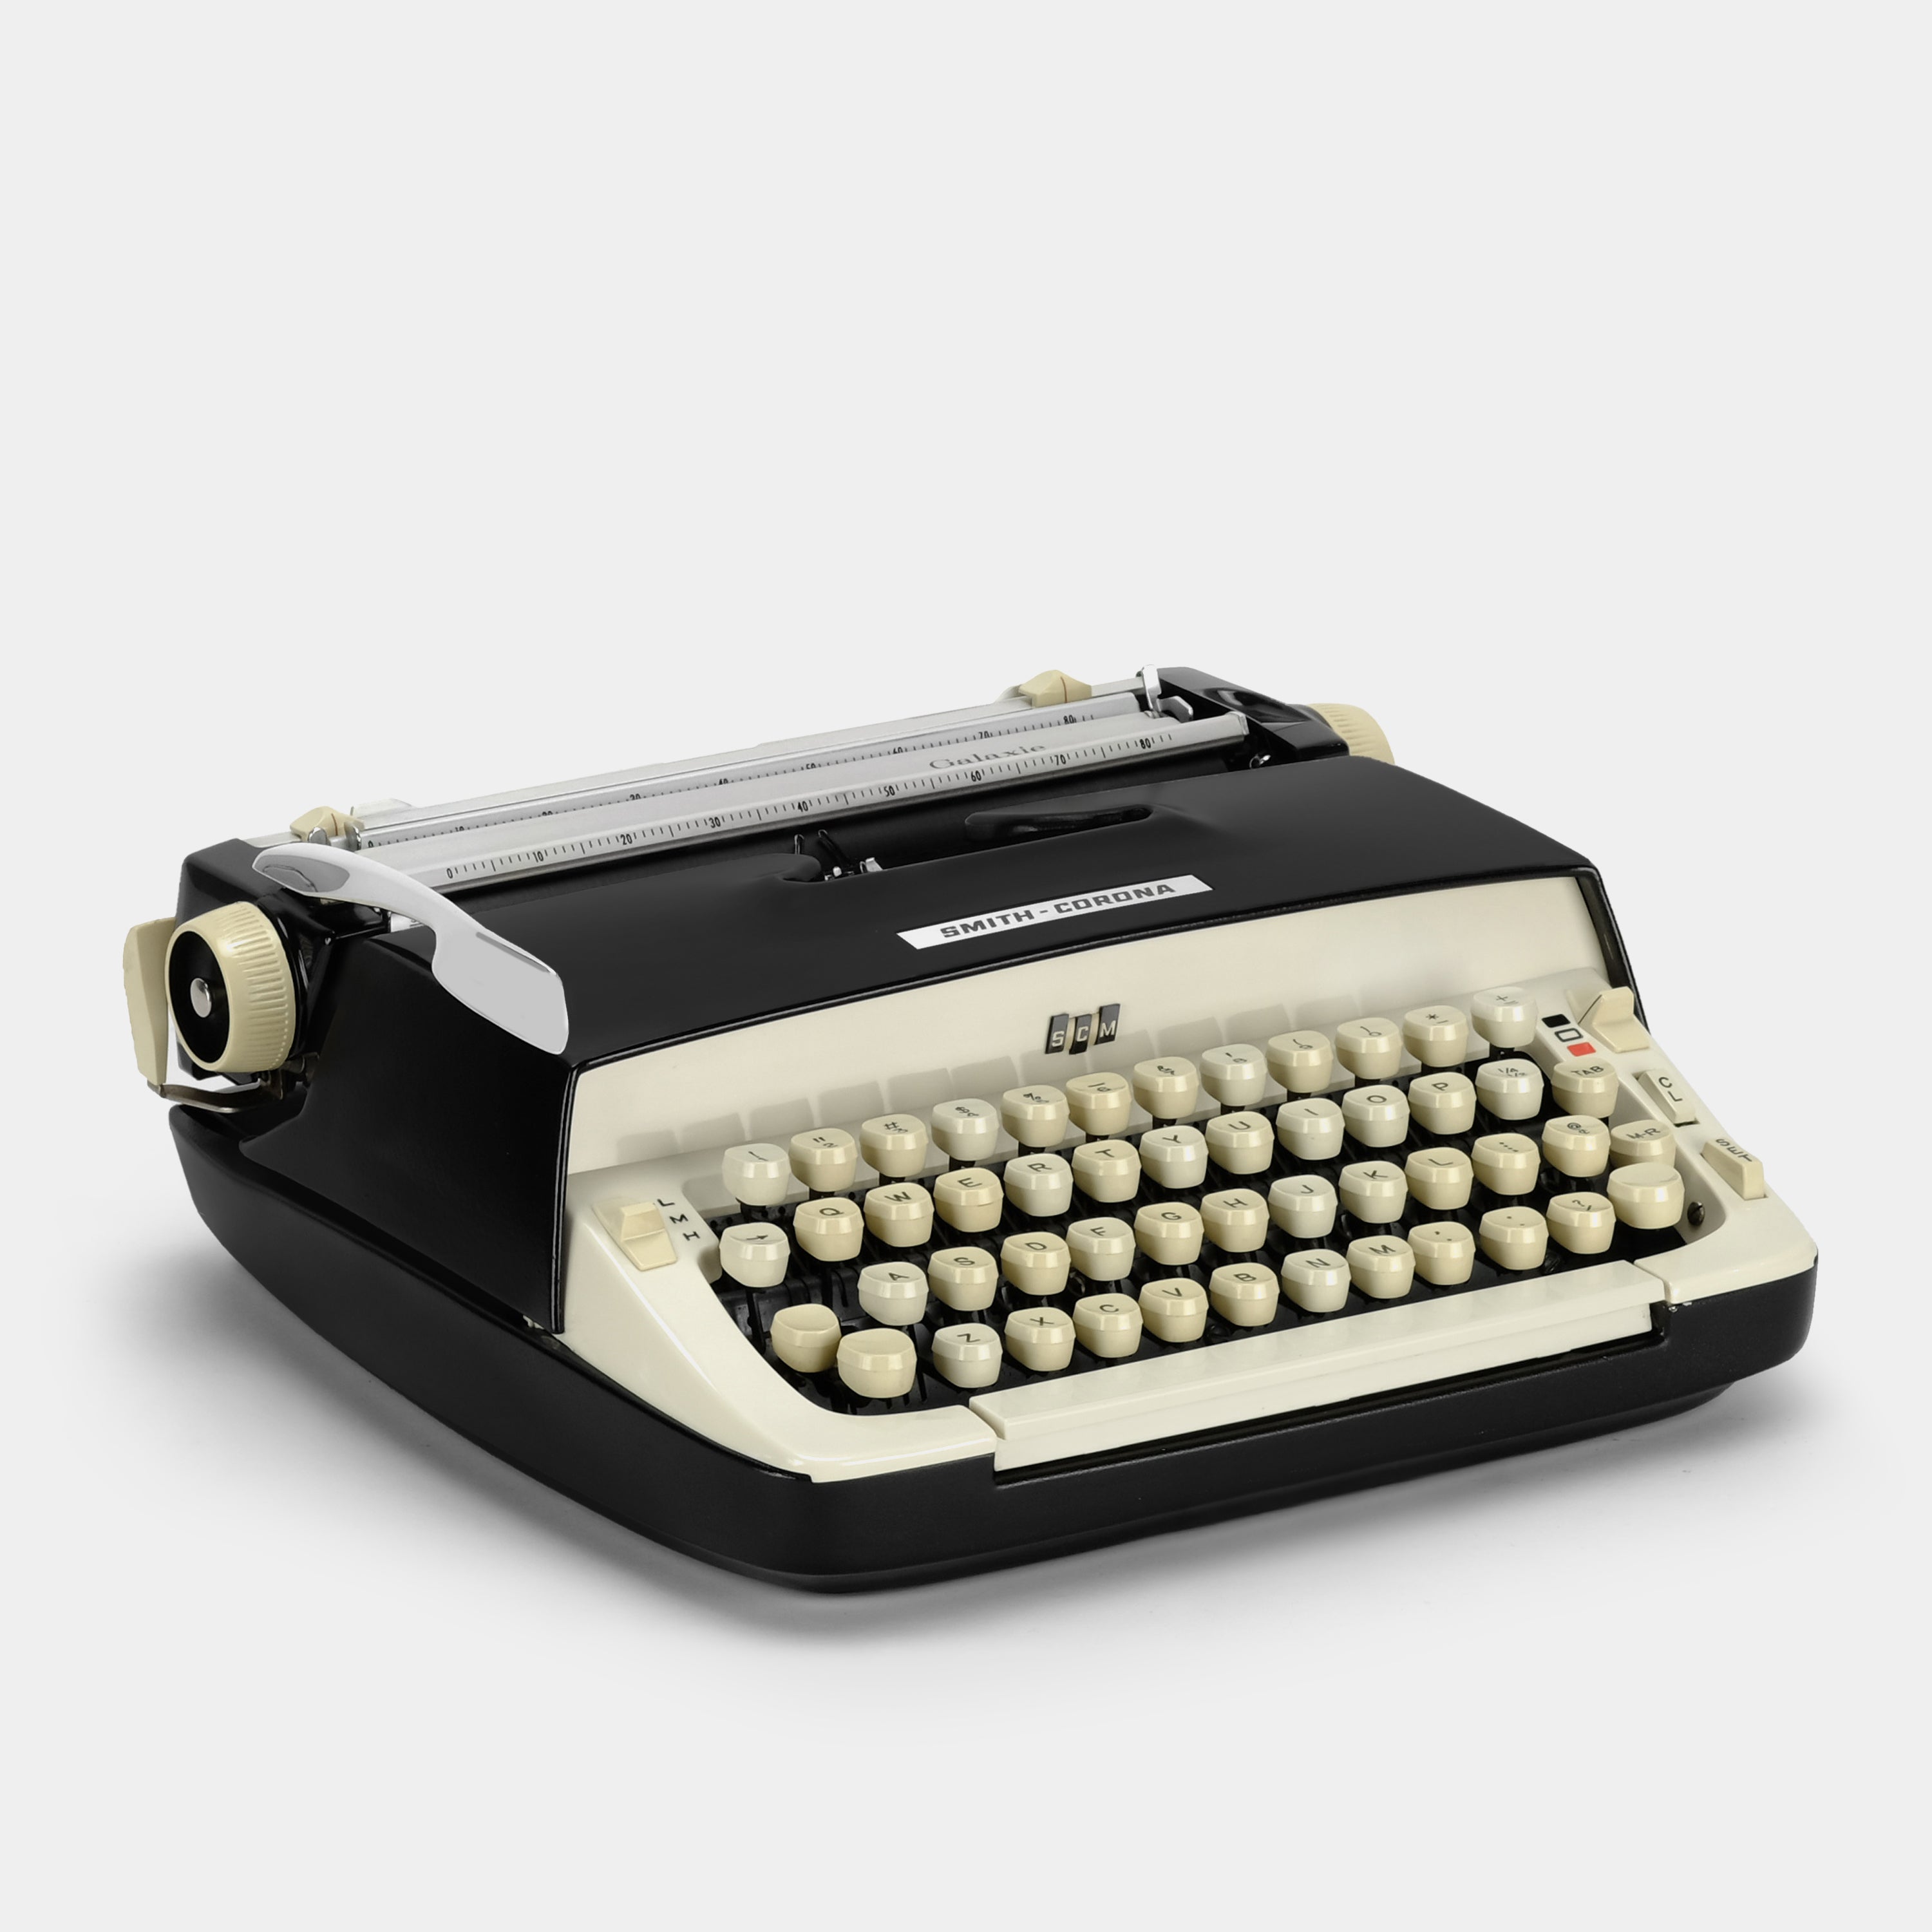 Smith-Corona Galaxie Black Manual Typewriter and Case